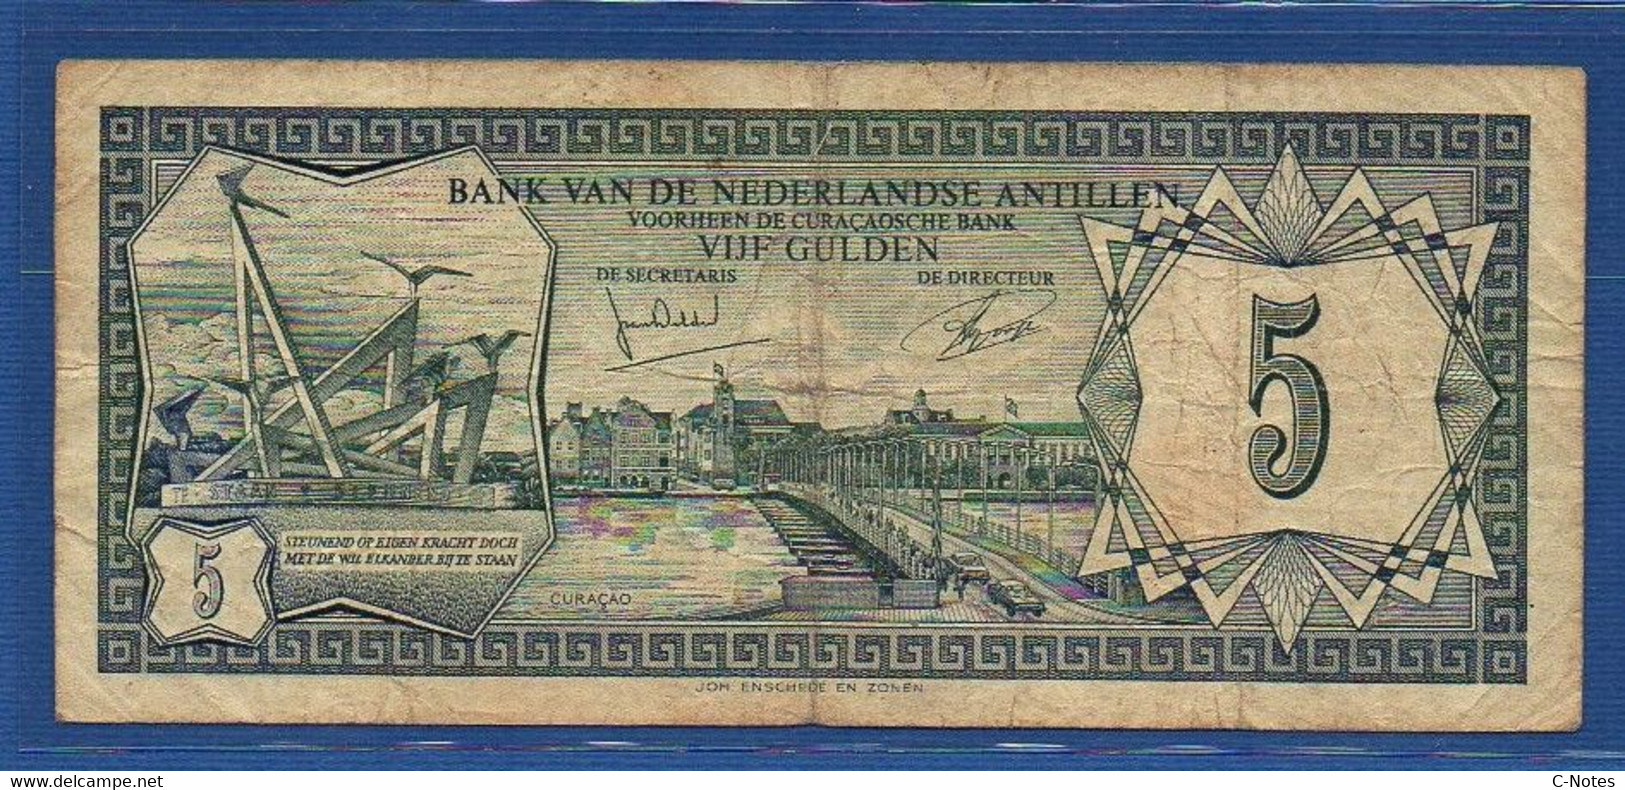 NETHERLANDS ANTILLES - P. 8b – 5 Gulden 1972 F/VF, Serie PC142156 - Nederlandse Antillen (...-1986)